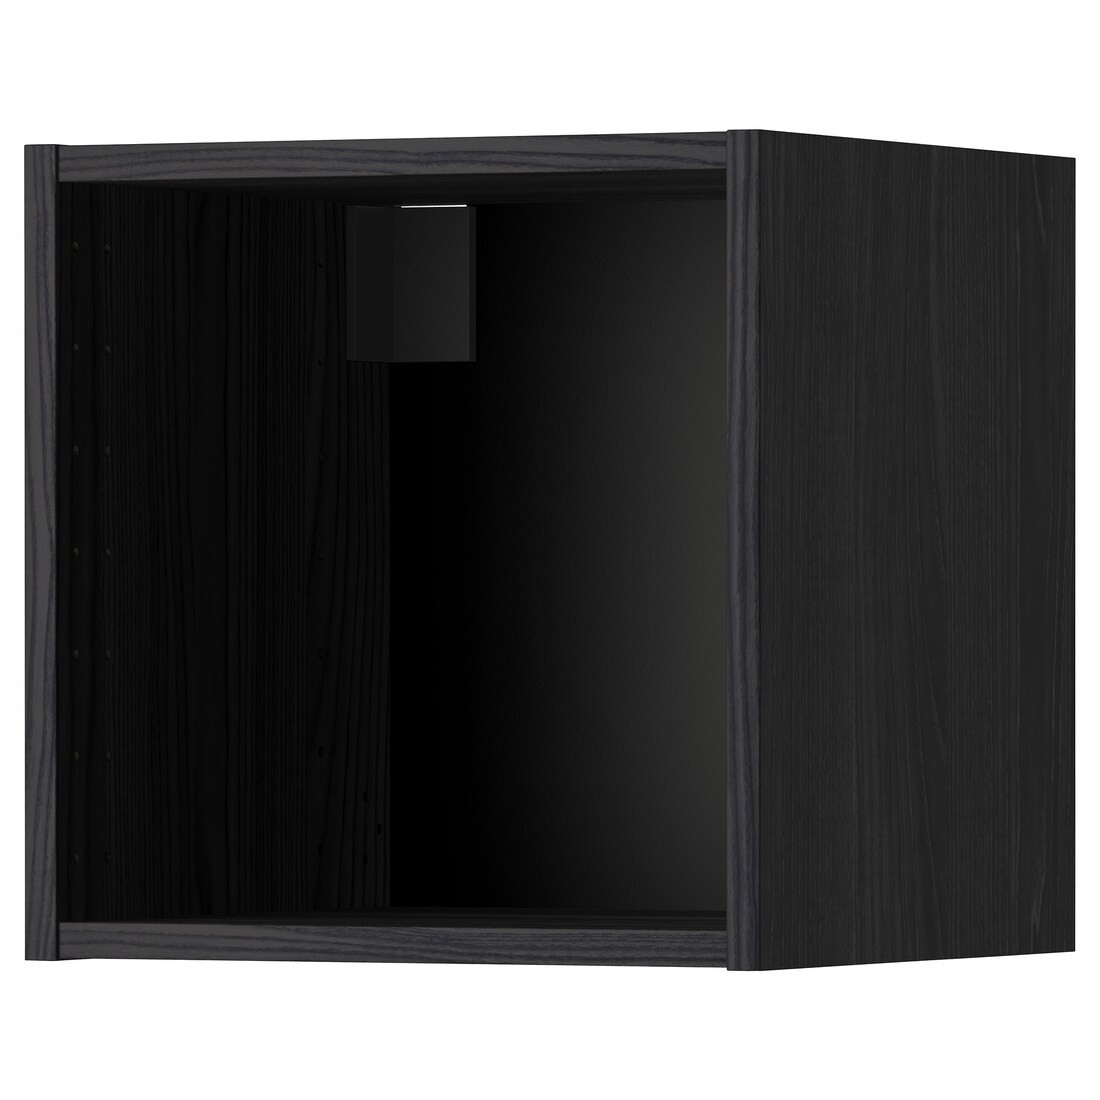 IKEA METOD МЕТОД Каркас навесного шкафа, имитация дерева черный, 40x37x40 см 30205552 302.055.52